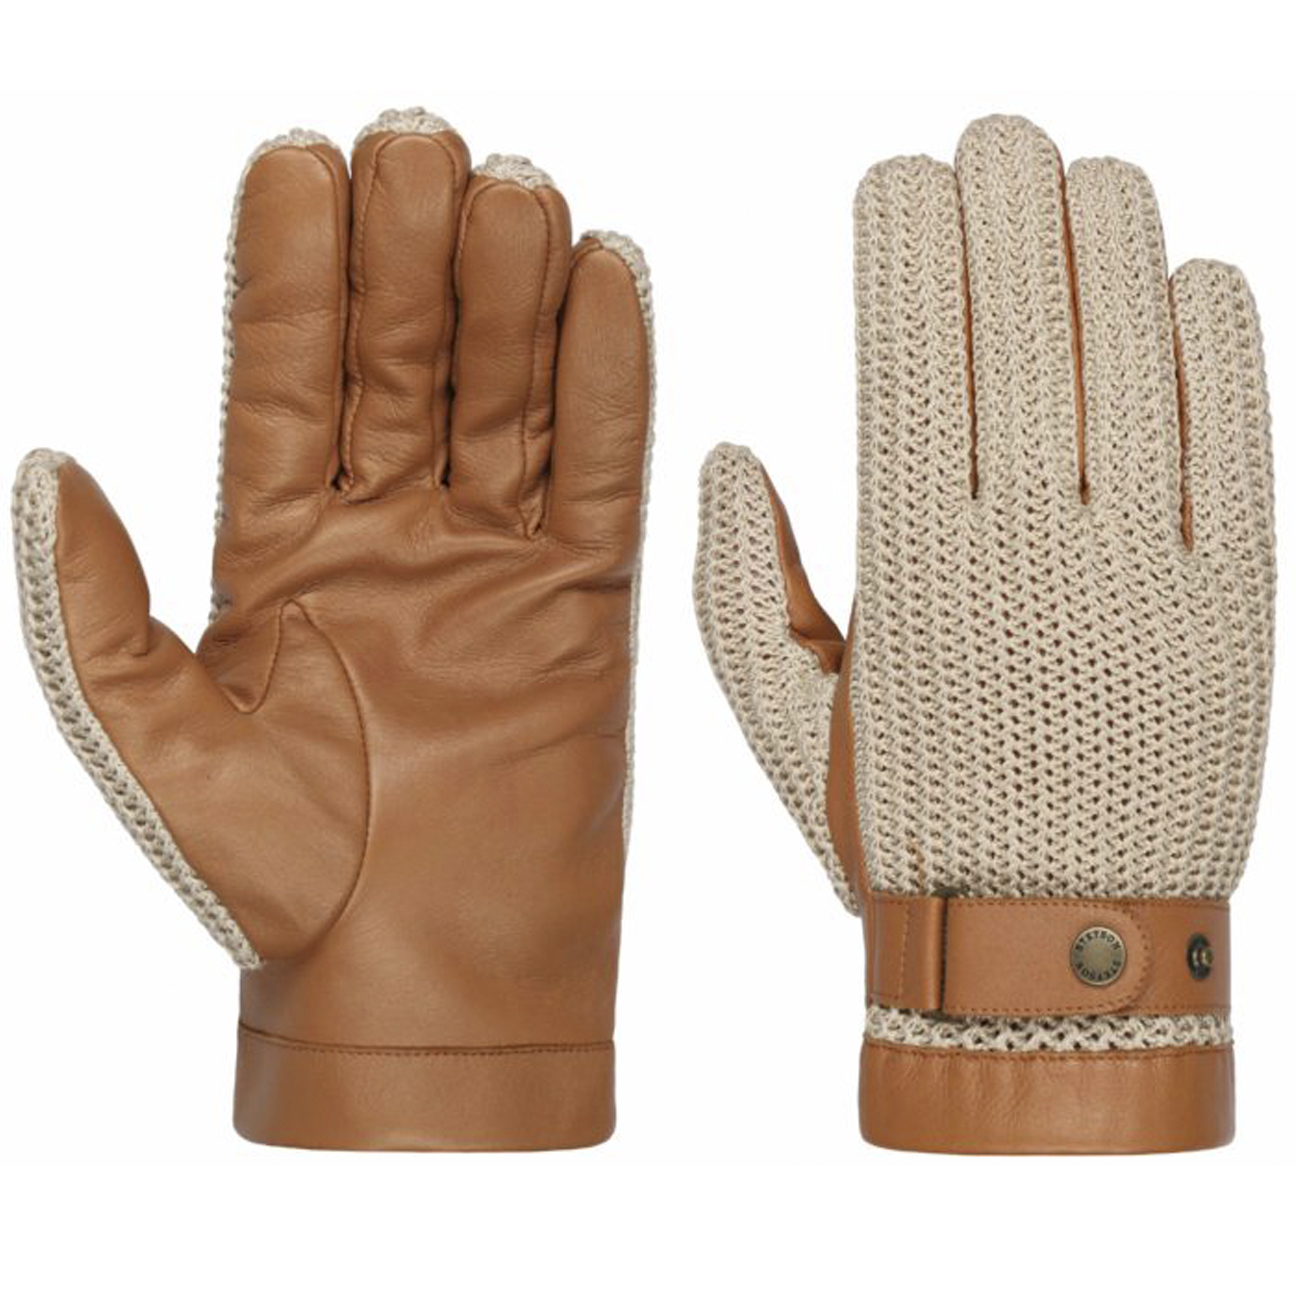 Stetson - Sheep Nappa & Knit Gloves - Brown